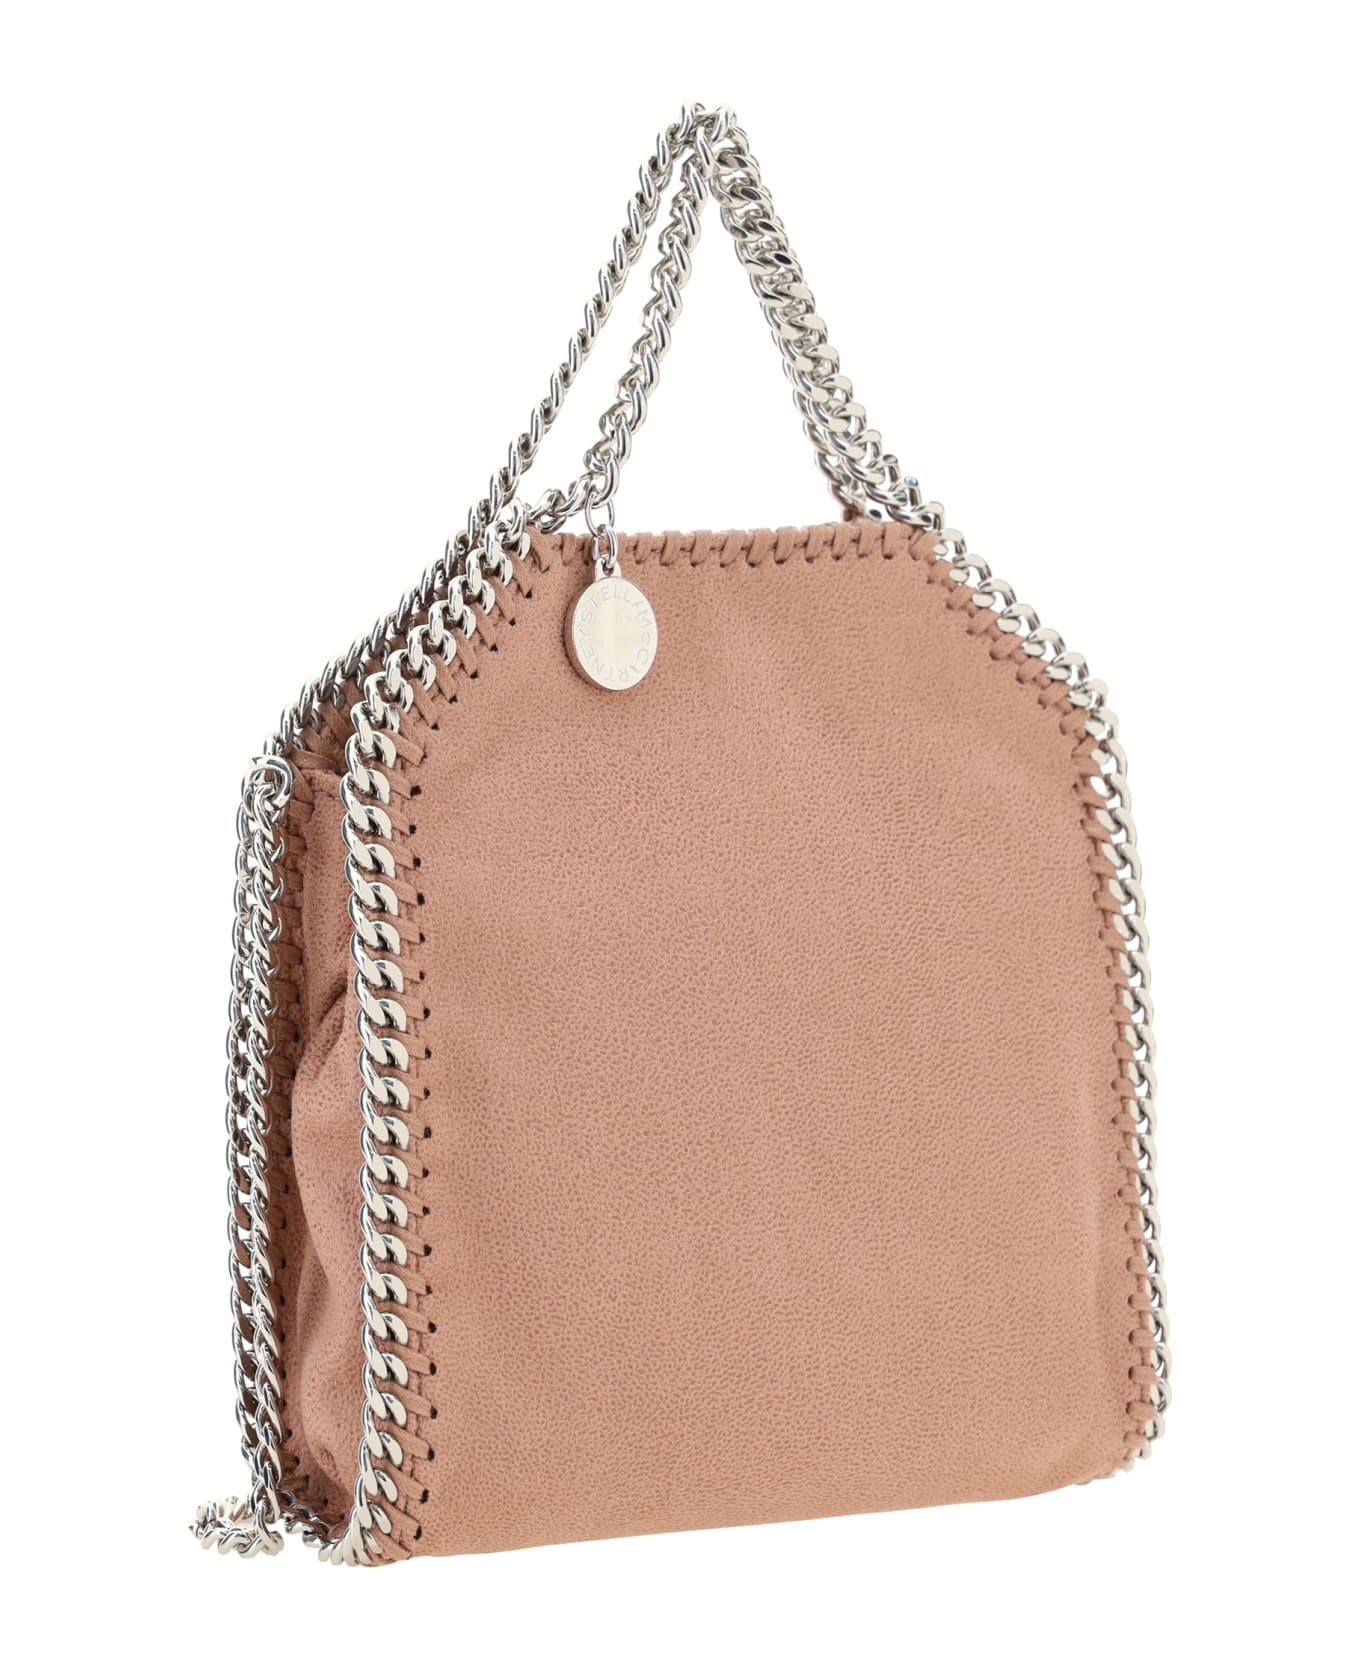 Stella McCartney Tiny 'falabella' Handbag - Chain Pink